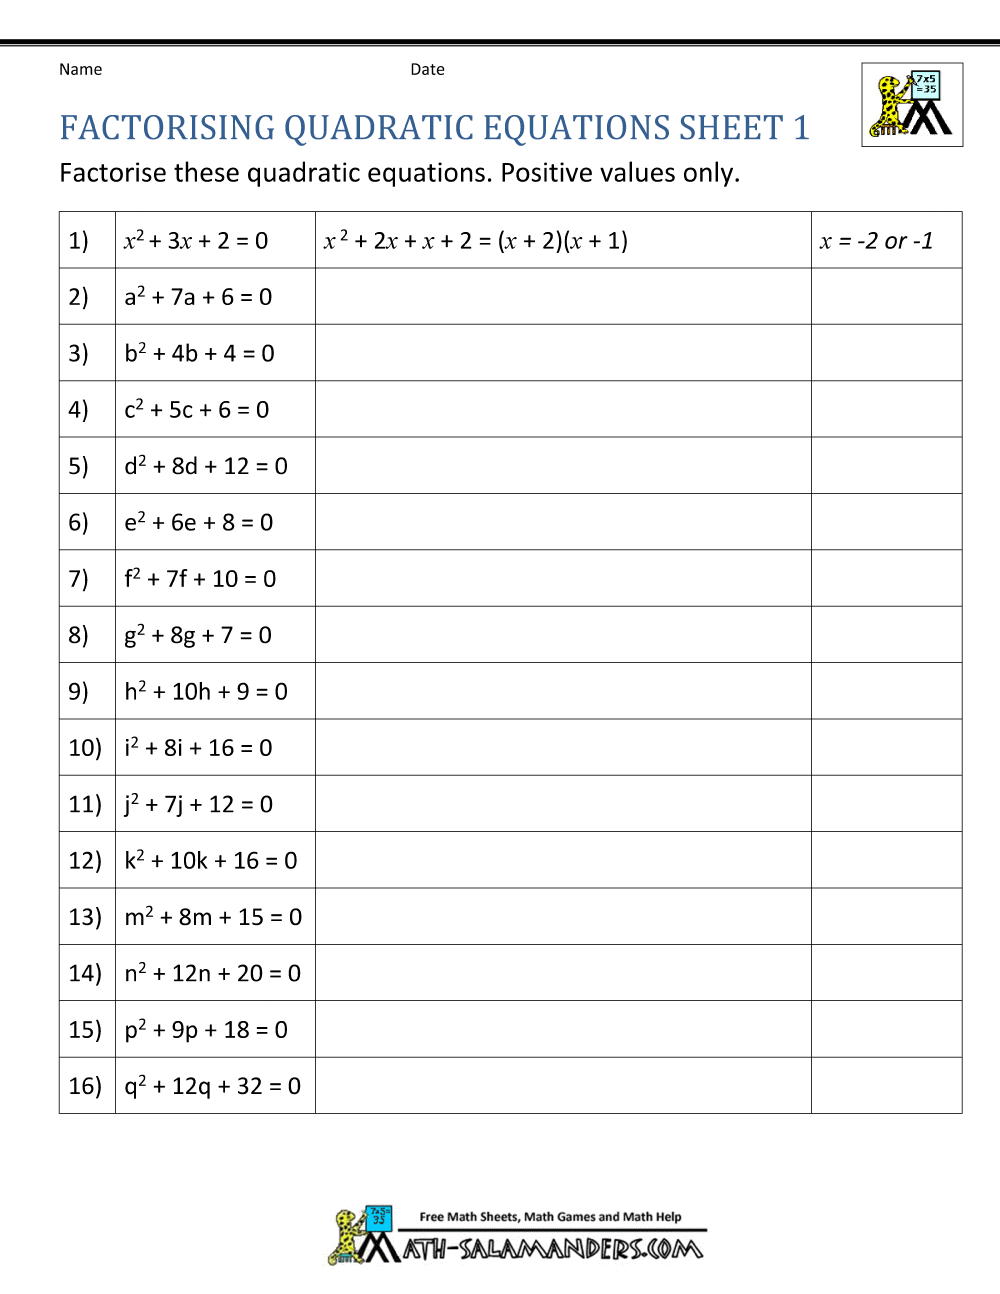 Factoring Quadratic Equations With Regard To Factoring Quadratic Expressions Worksheet